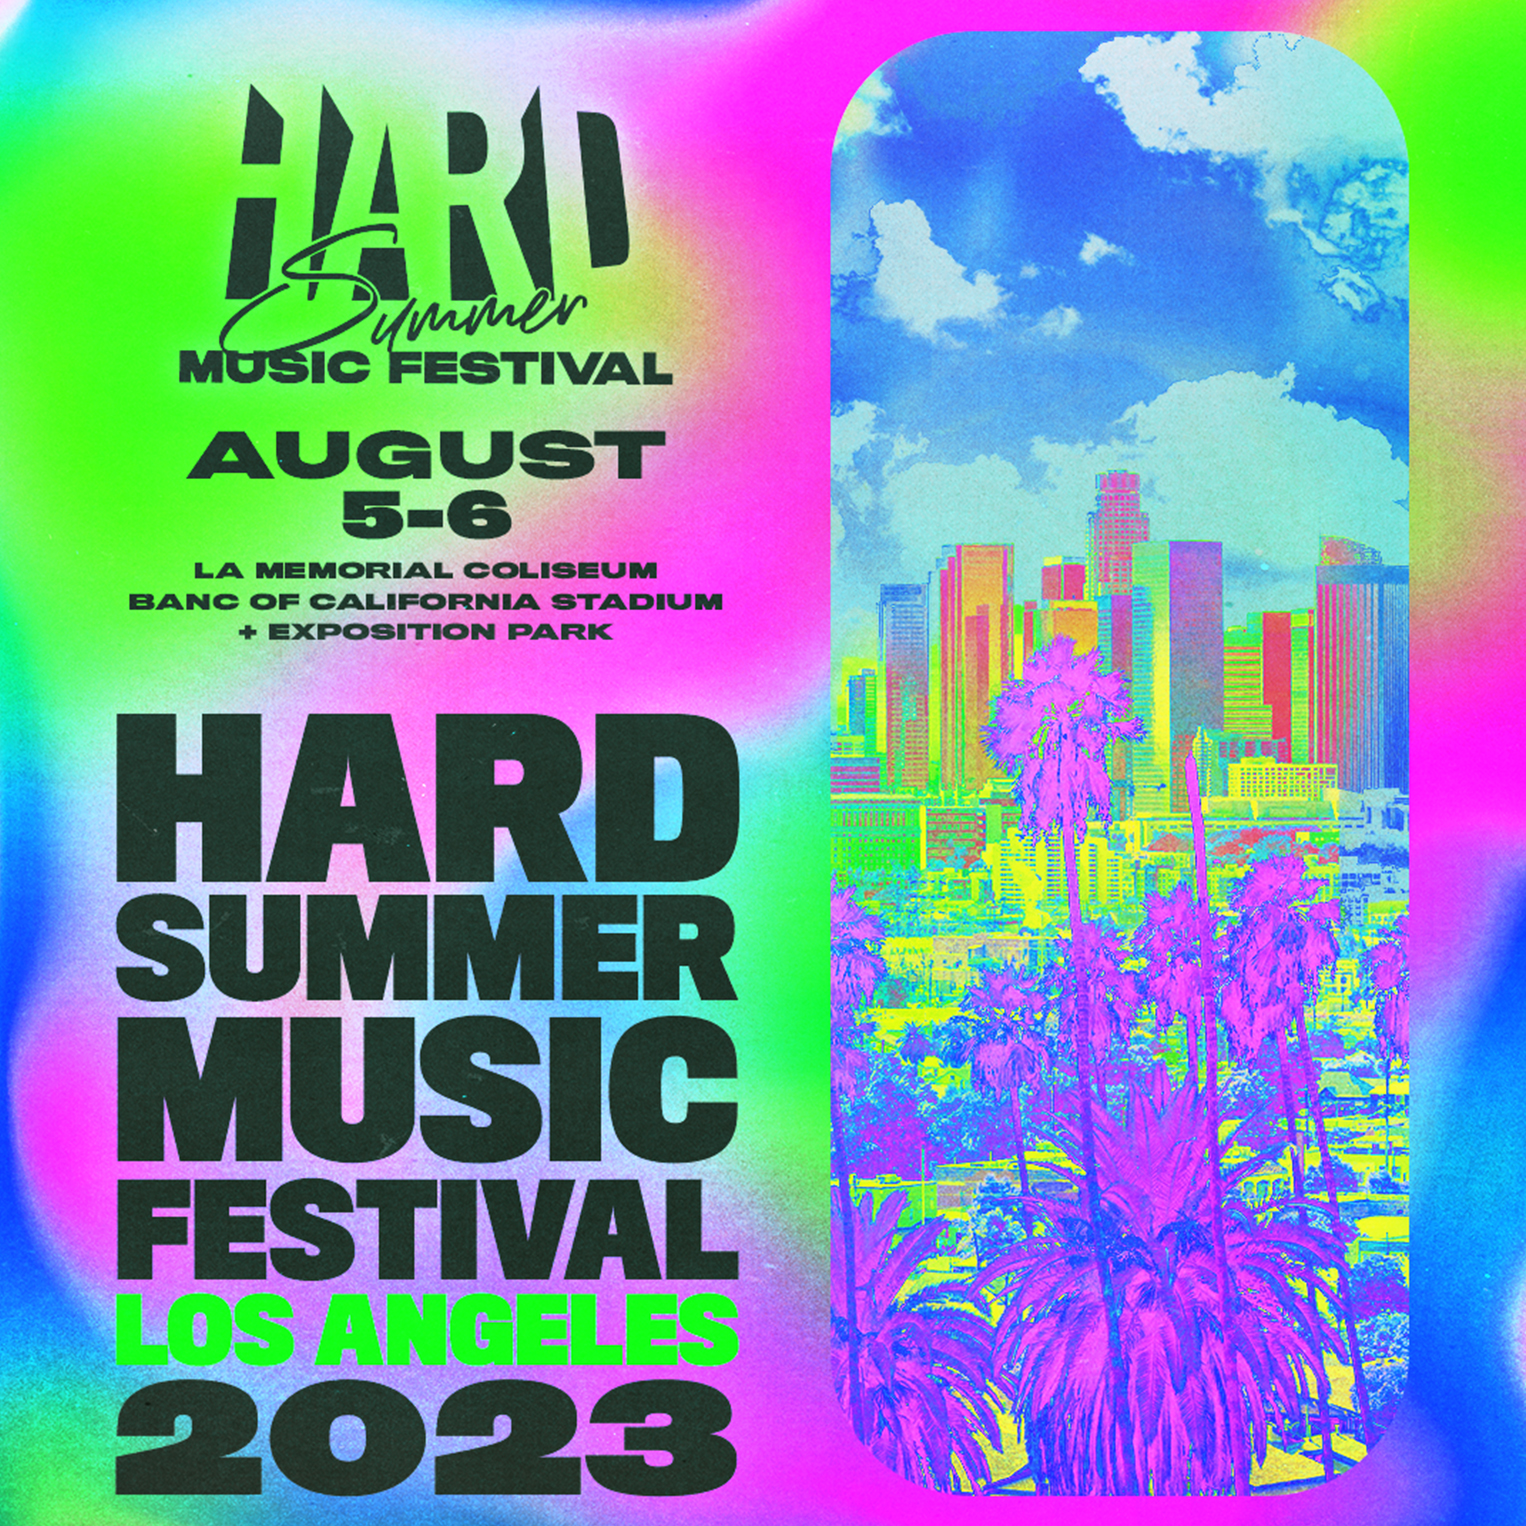 HARD: Alternative, Electronic & Hip-Hop Music Events